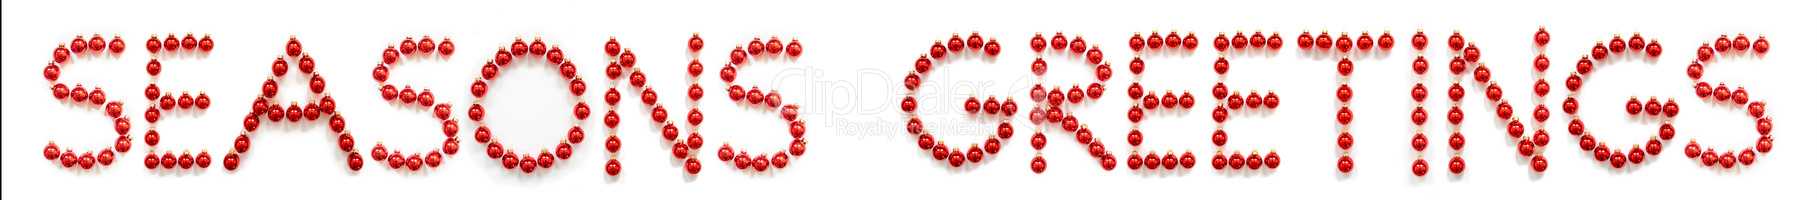 Red Christmas Ball Ornament Building Word Seasons Greetings